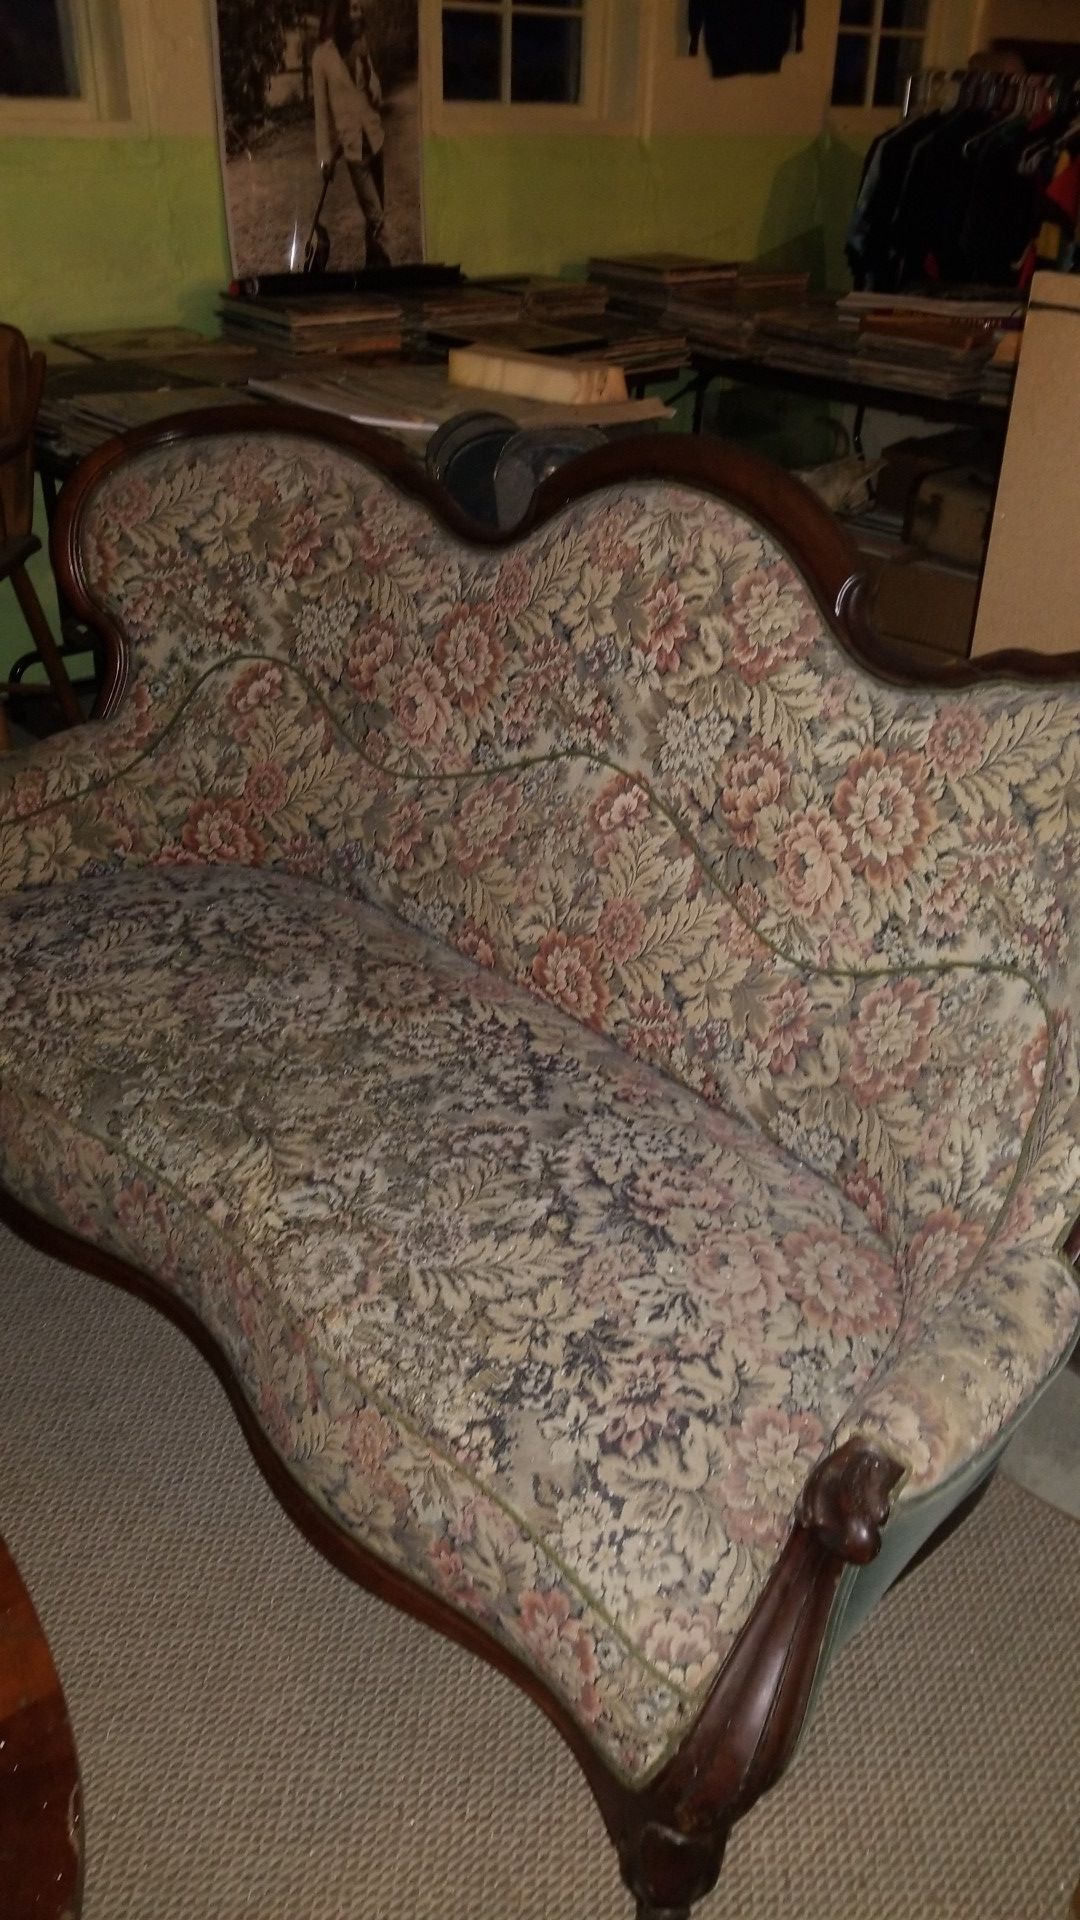 Super old sofa